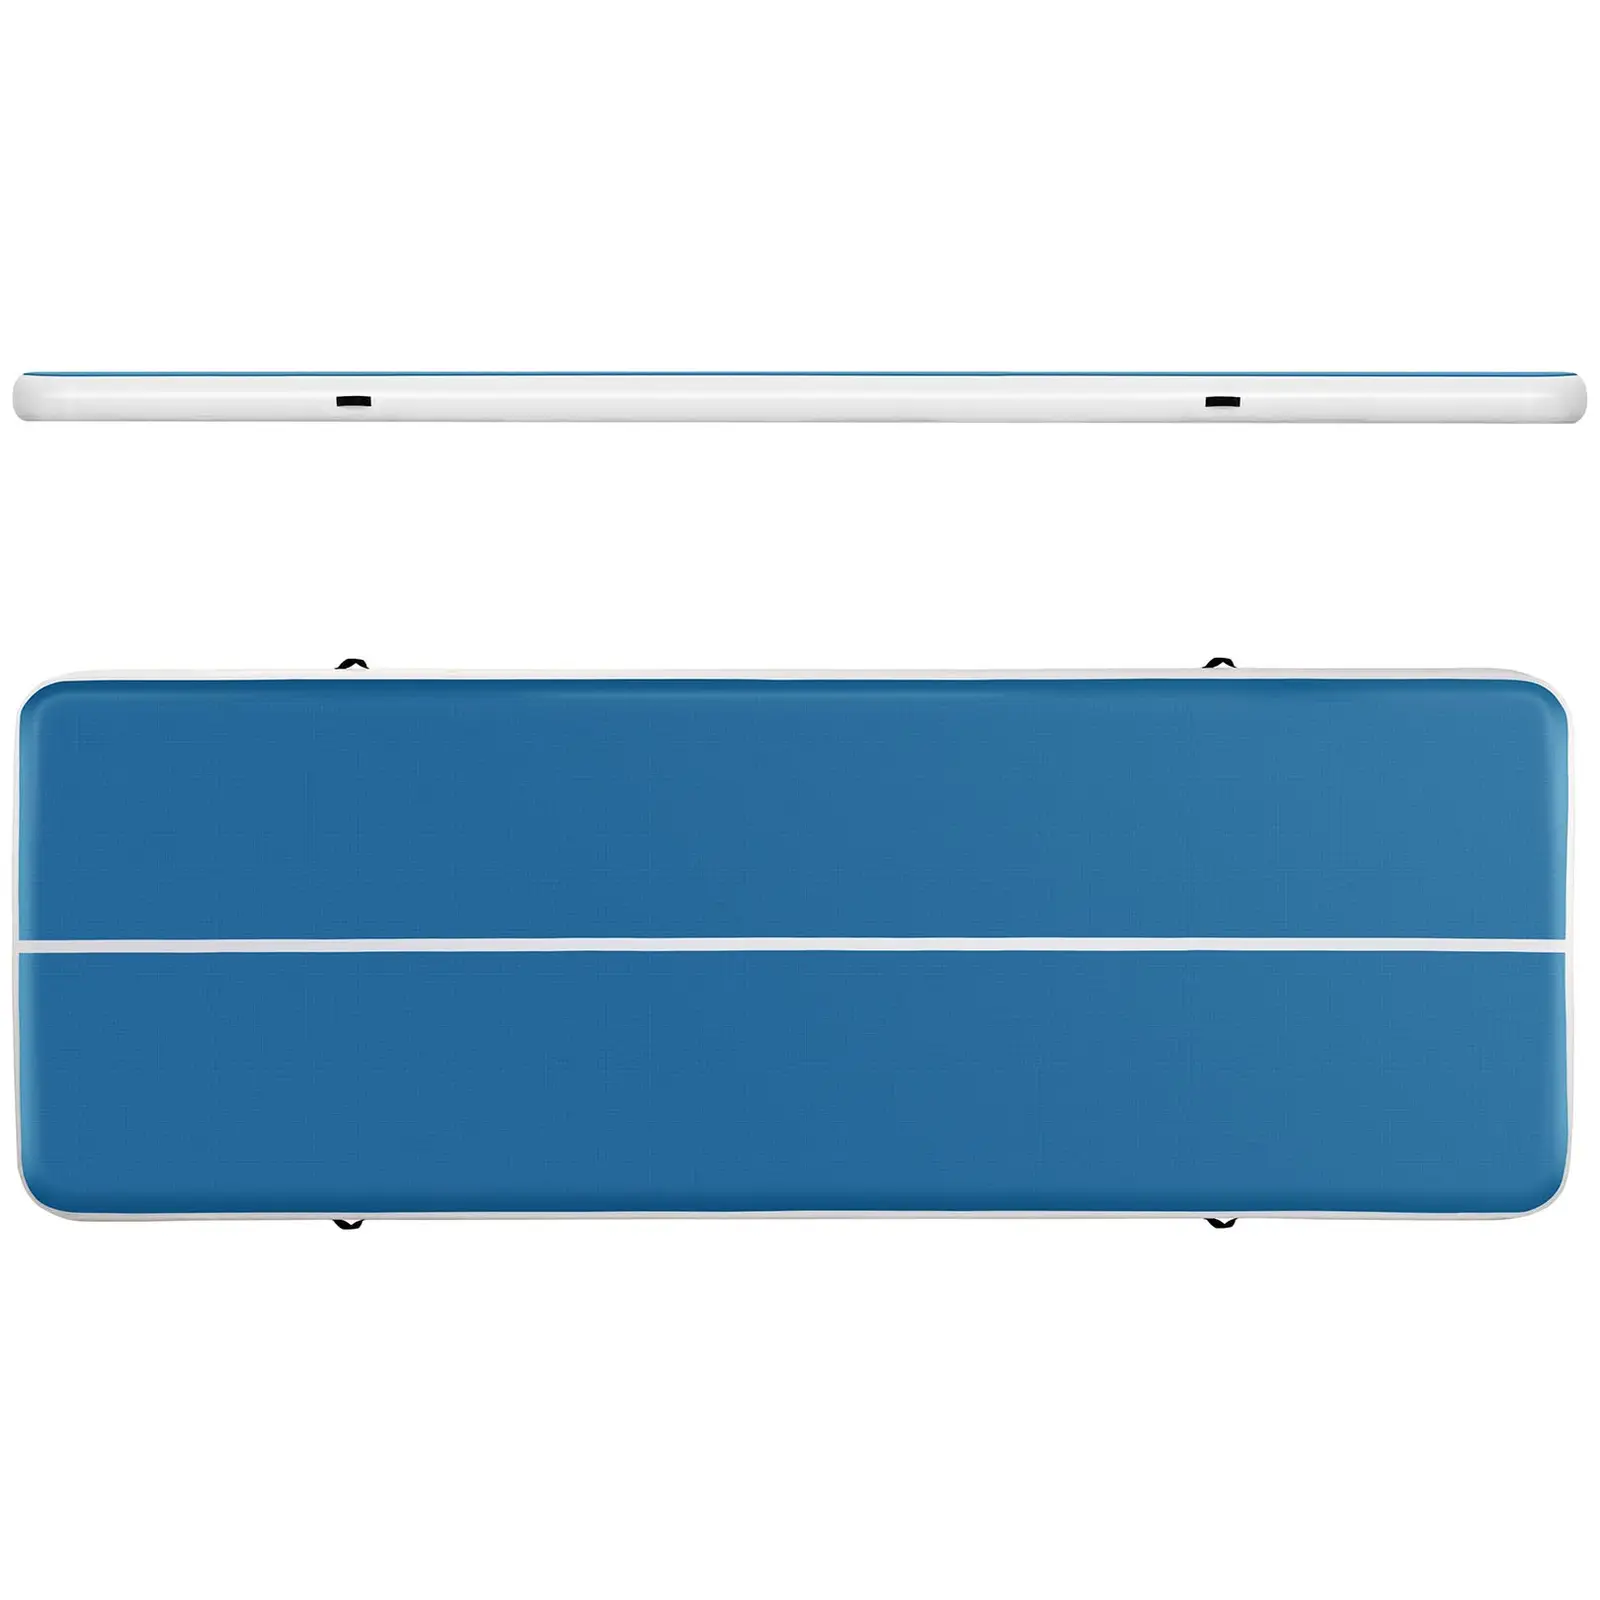 Uppblåsbar gymnastikmatta - 600 x 200 x 20 cm - blå och vit